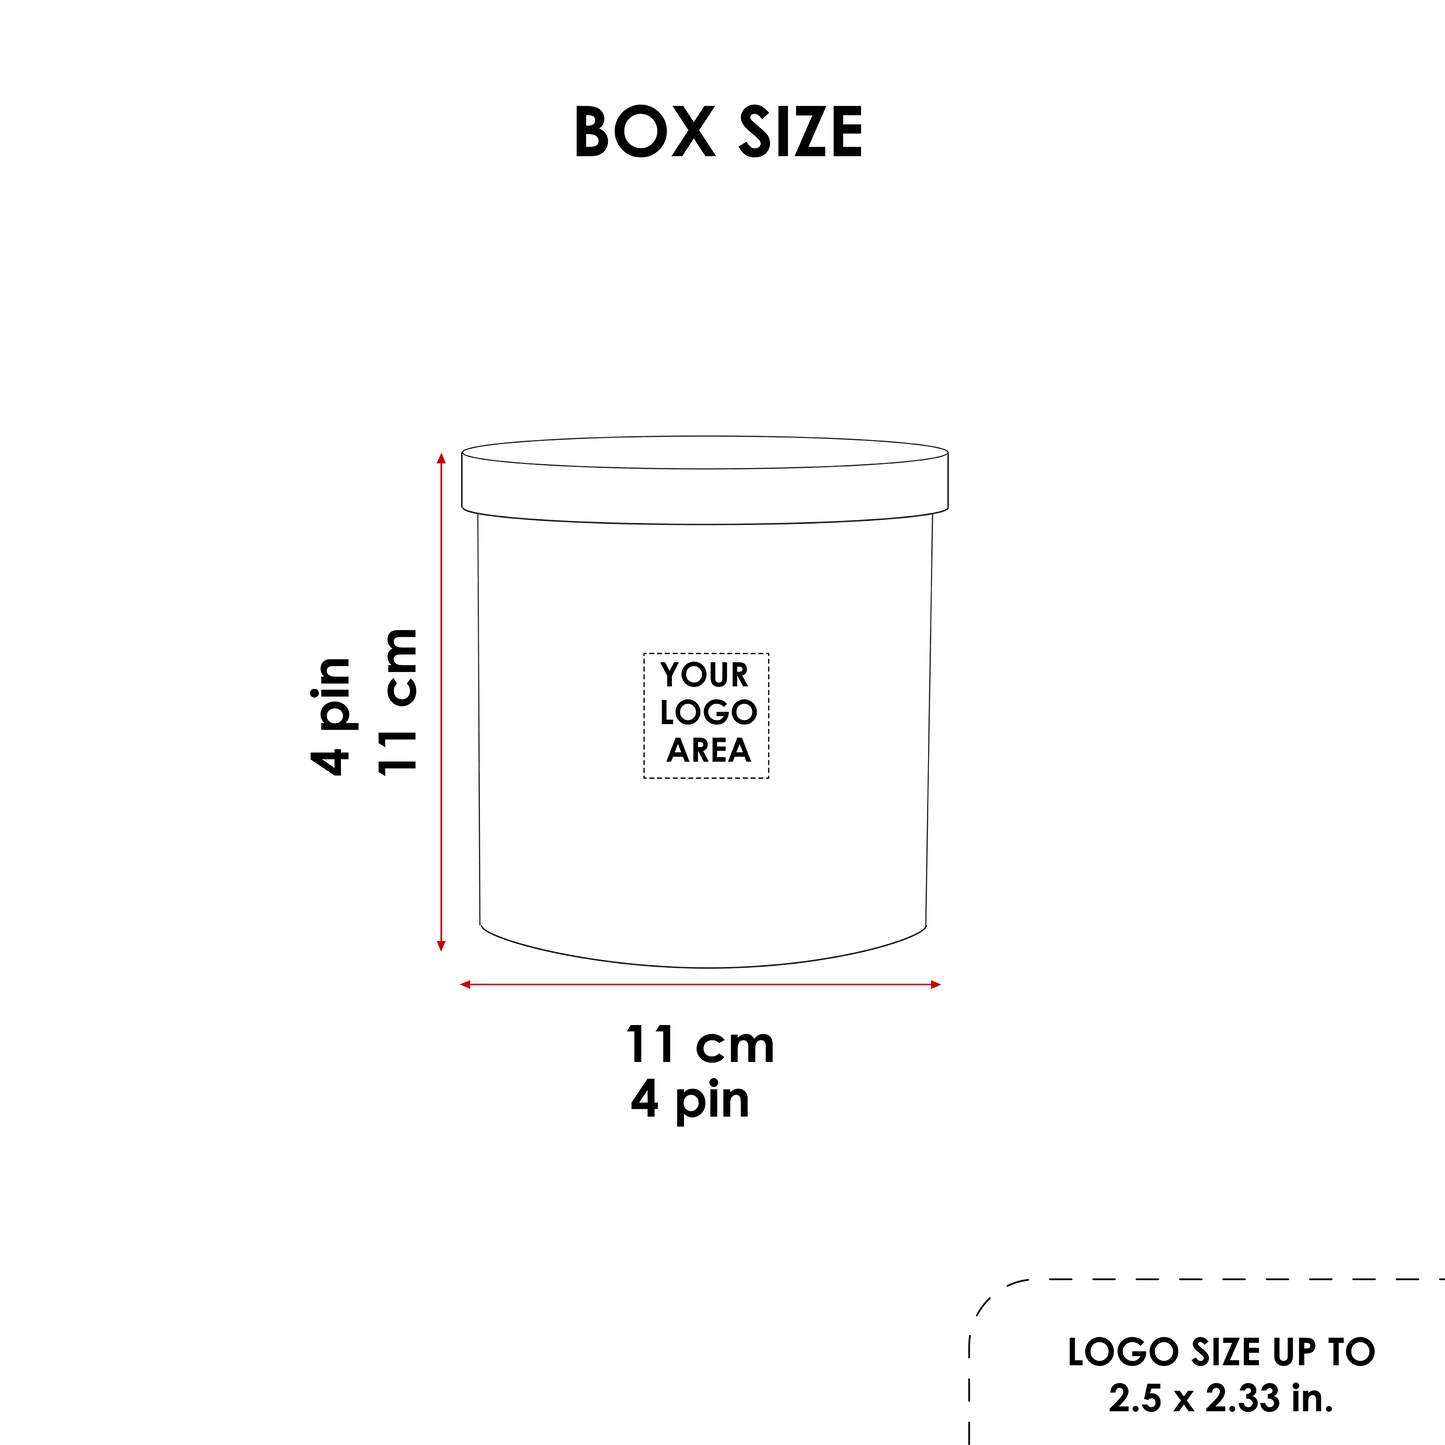 Kit 9 different sizes round and square boxes 9 in 1 - Velvet Black